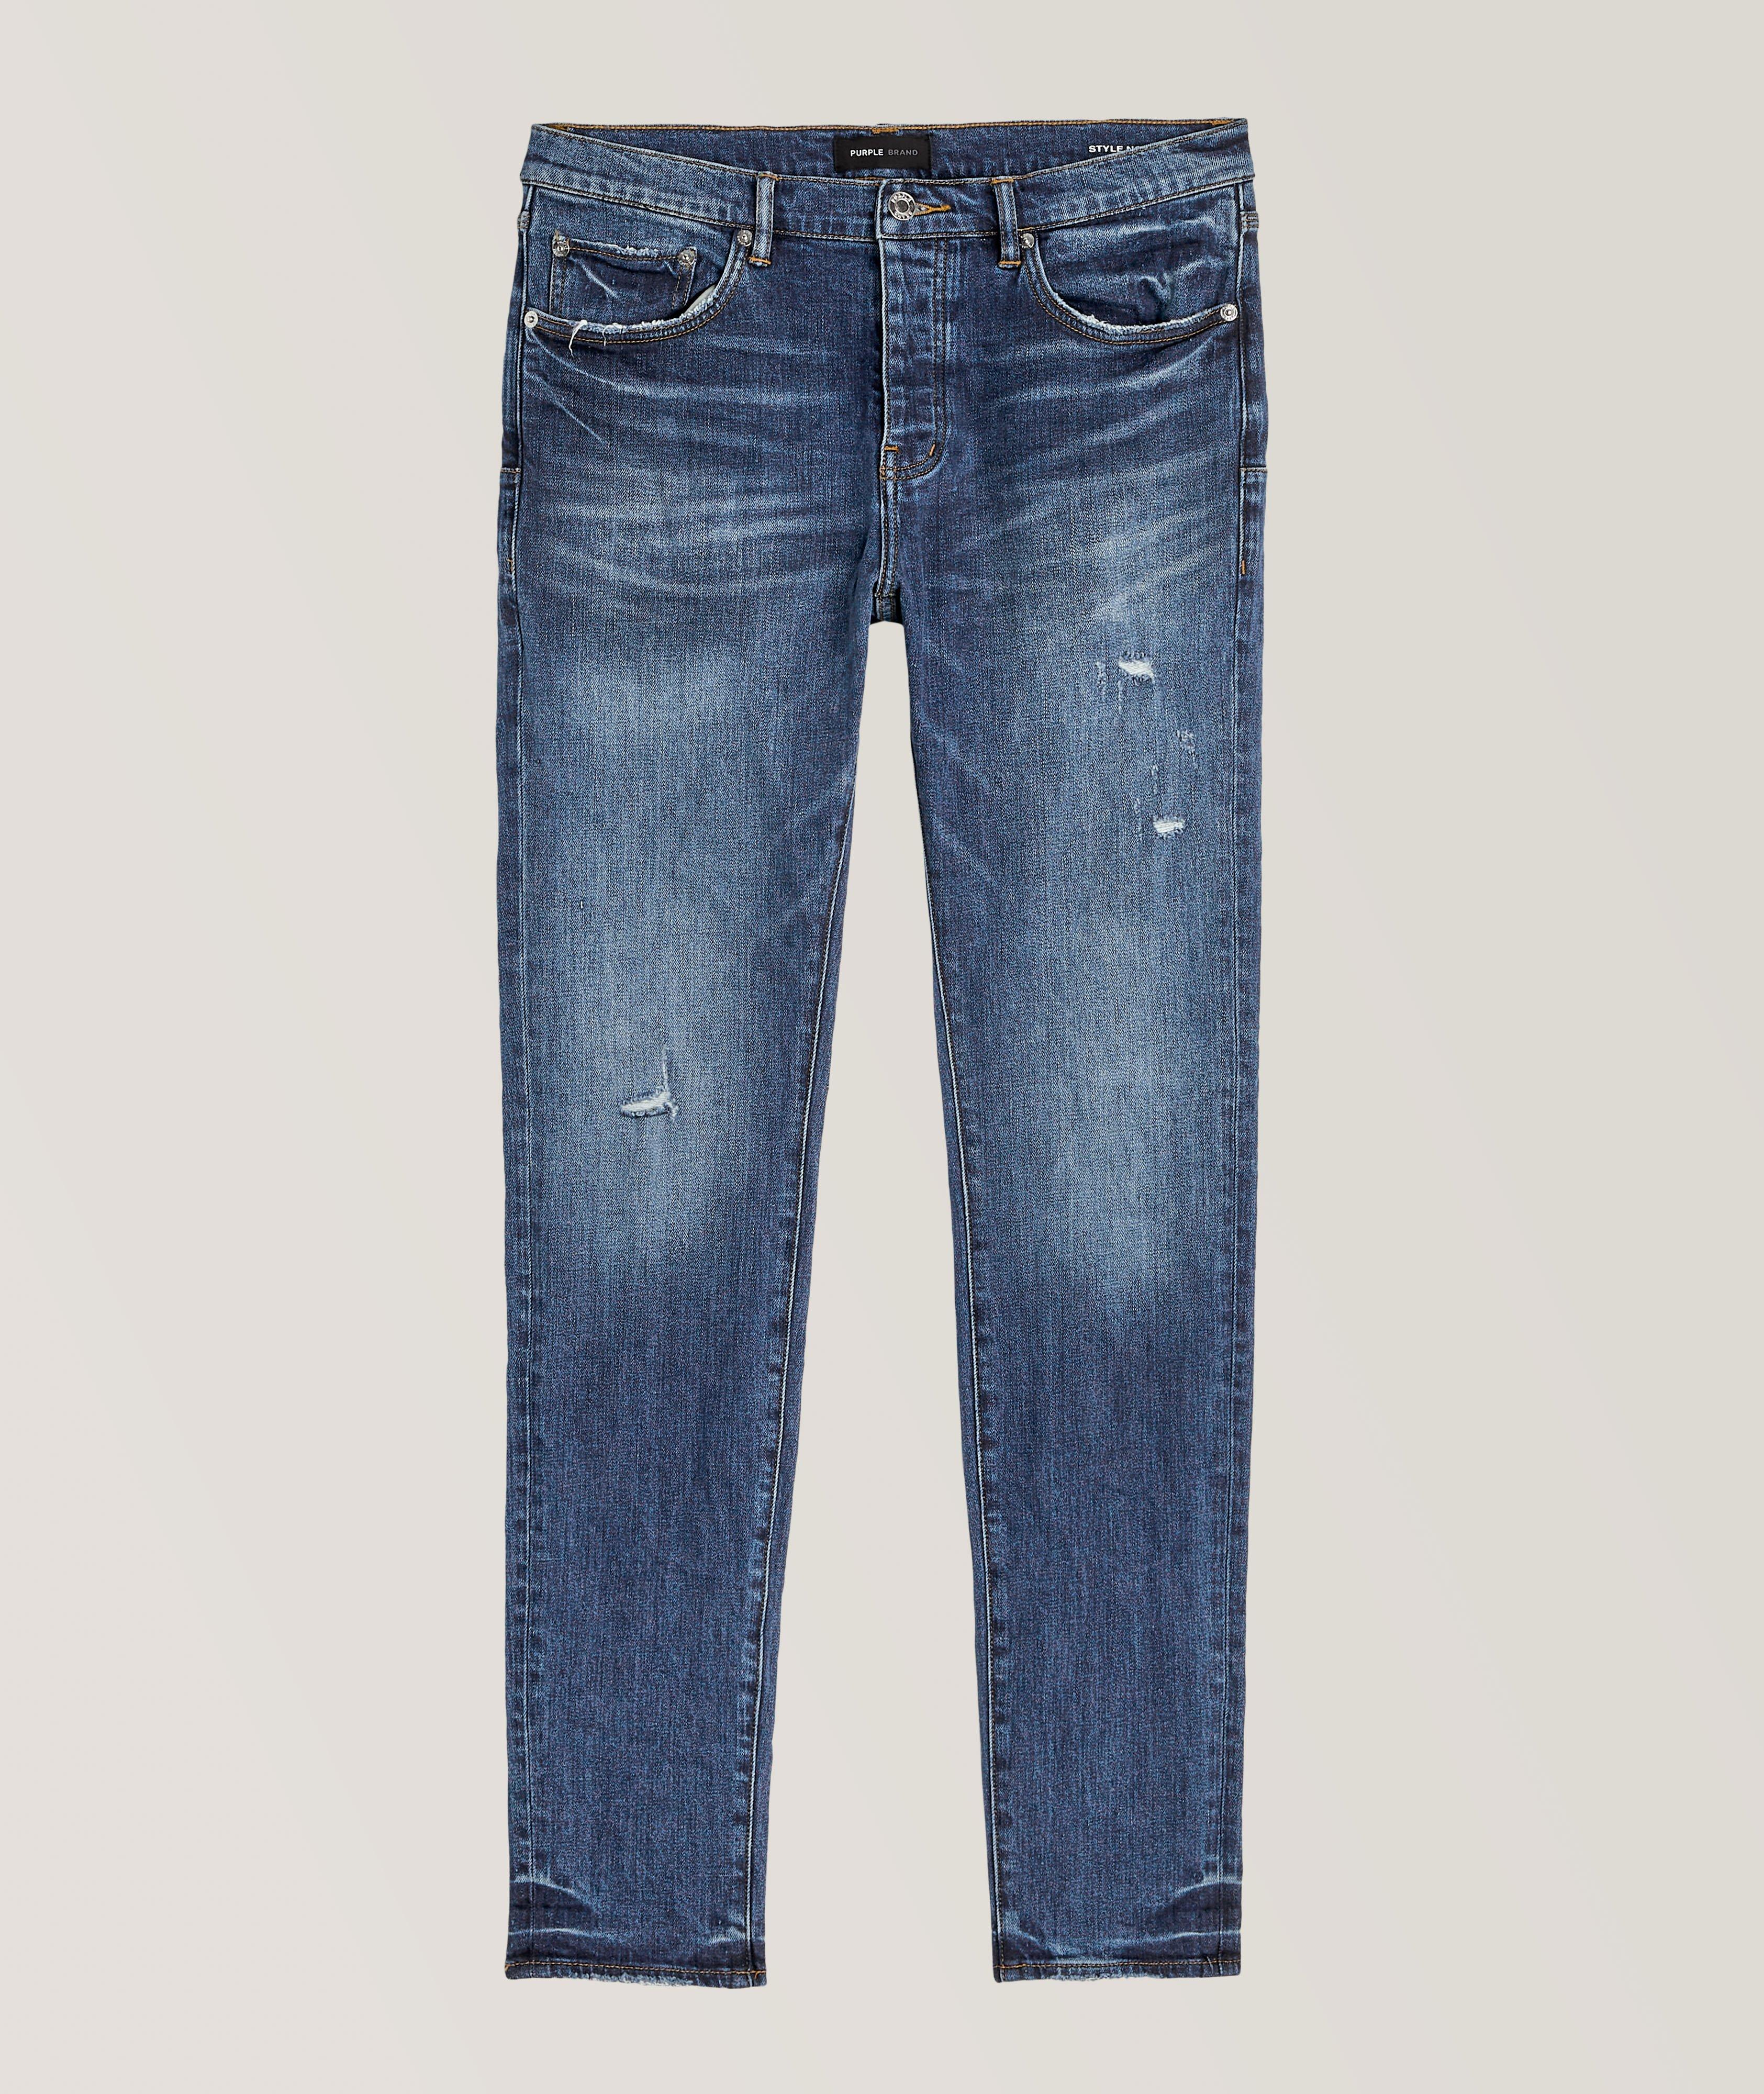 Purple Brand P001 1-Year Worn Distressed Jeans, Jeans